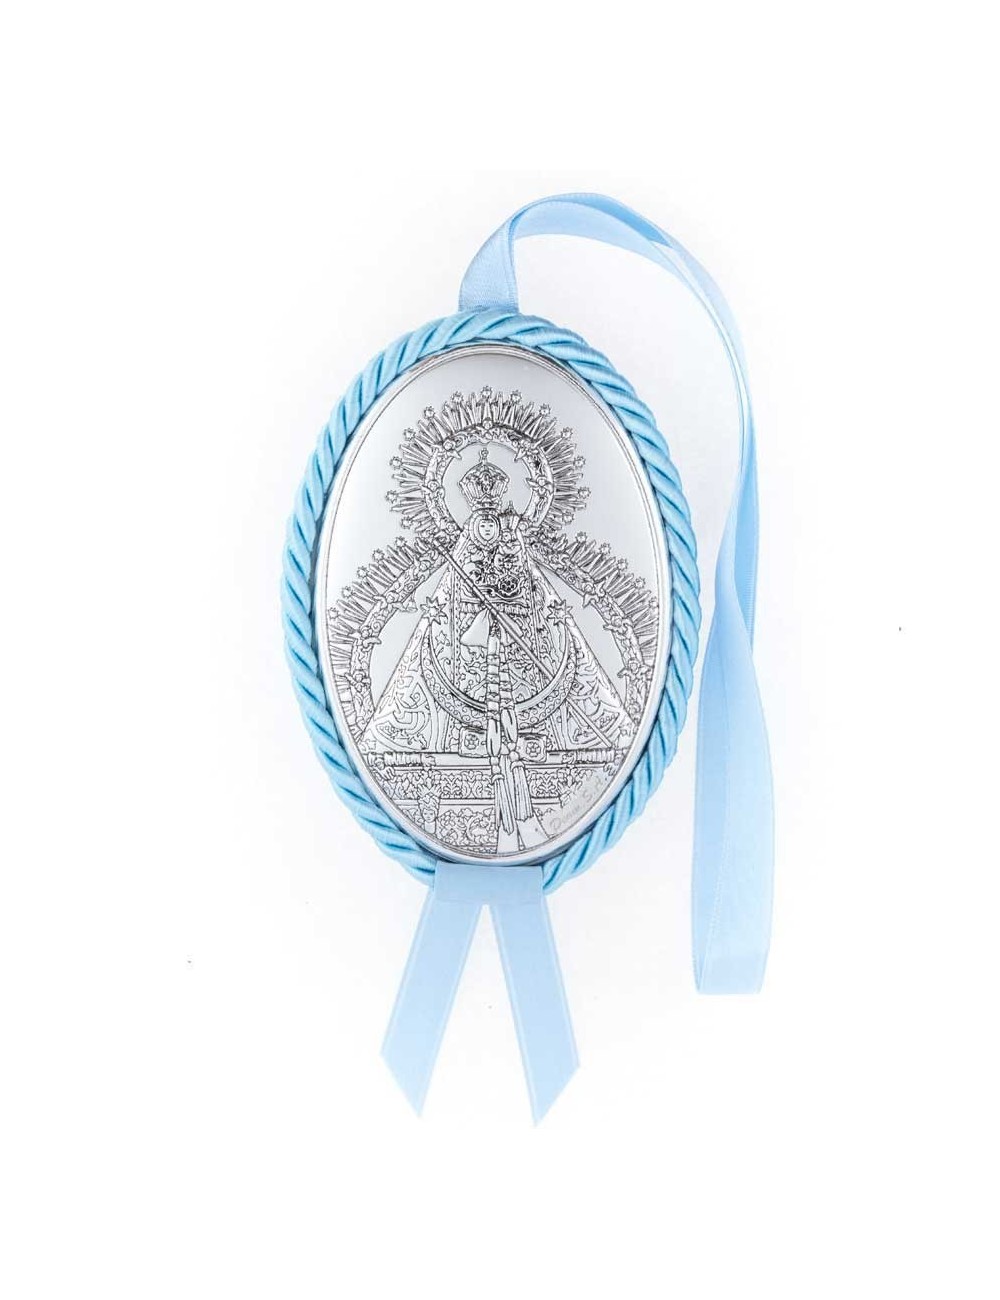 Medalla cuna Virgen de la Cabeza polipie oval azul musical